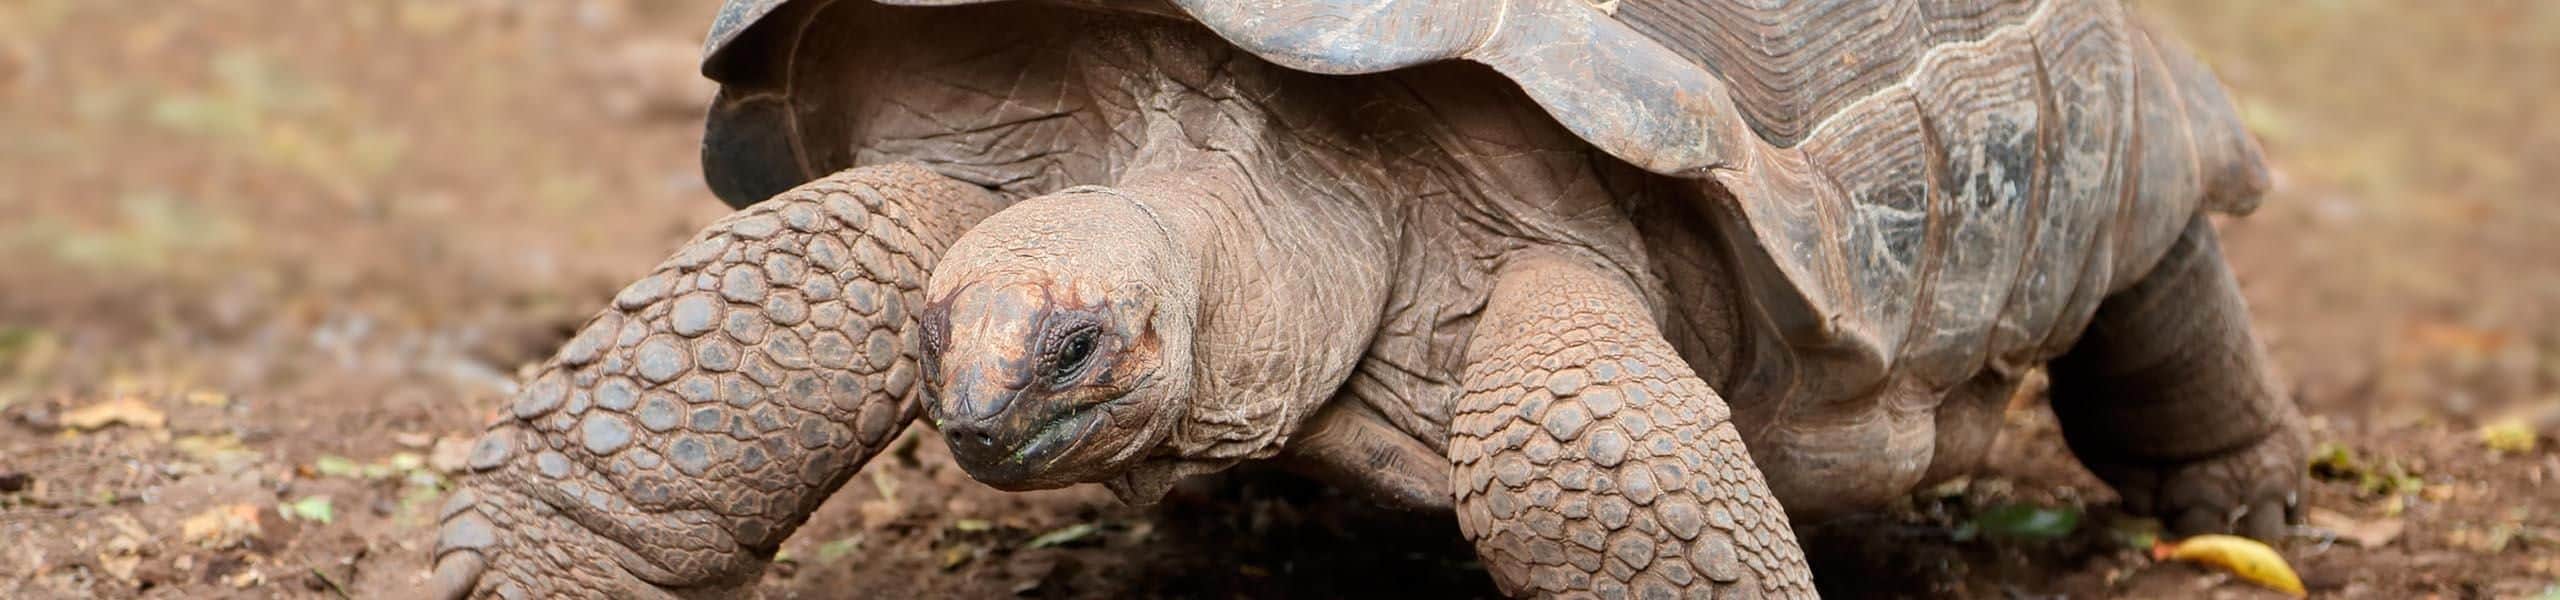 Aldabra Tortoise - Aldabrachelys gigantea | Paultons Park